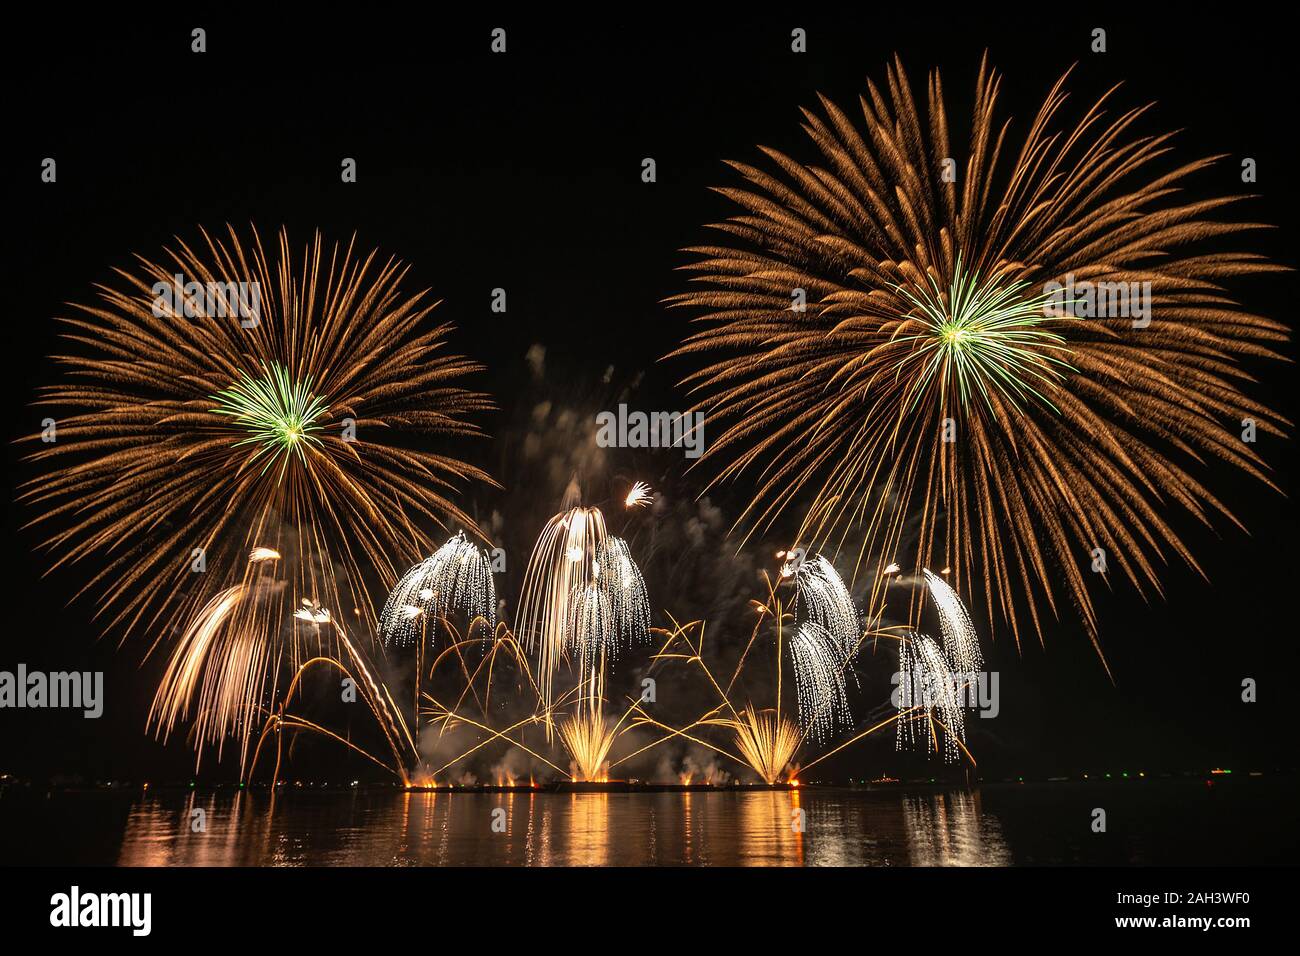 Colorful Fireworks display celebration Stock Photo